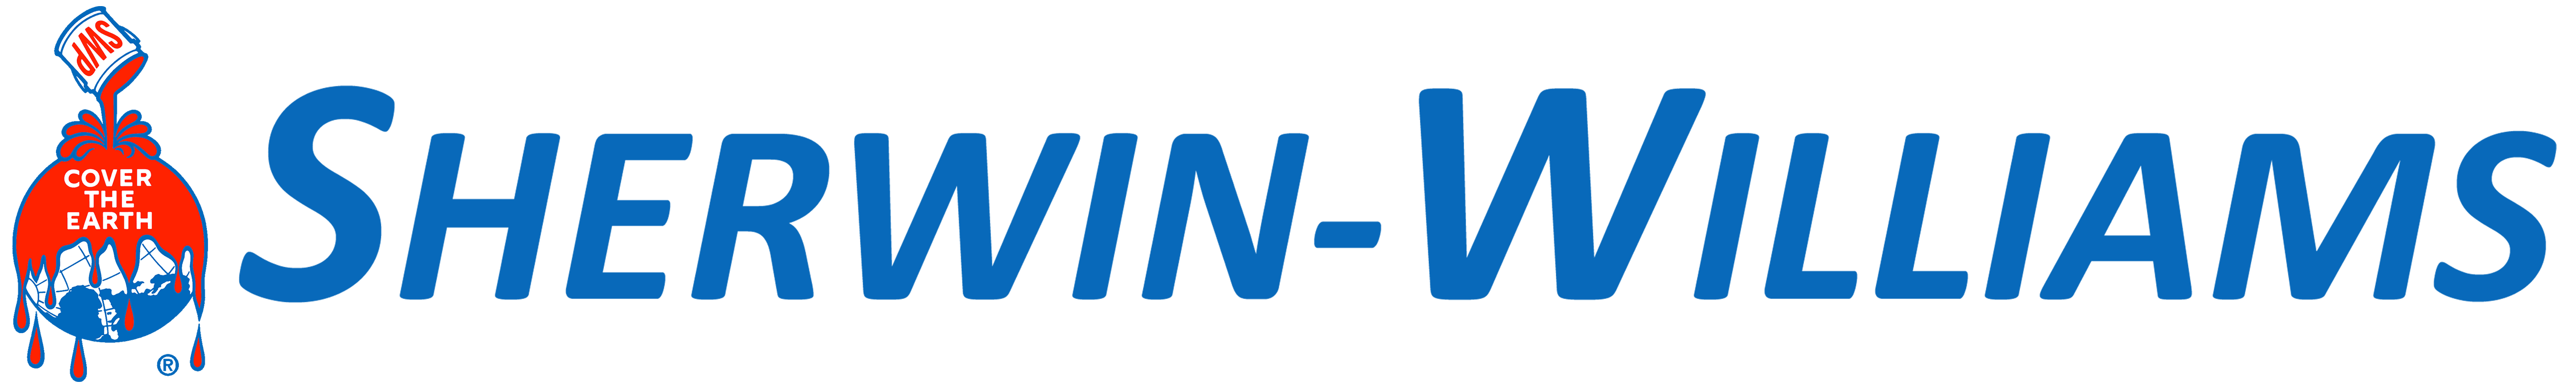 sherwin-williams-logo